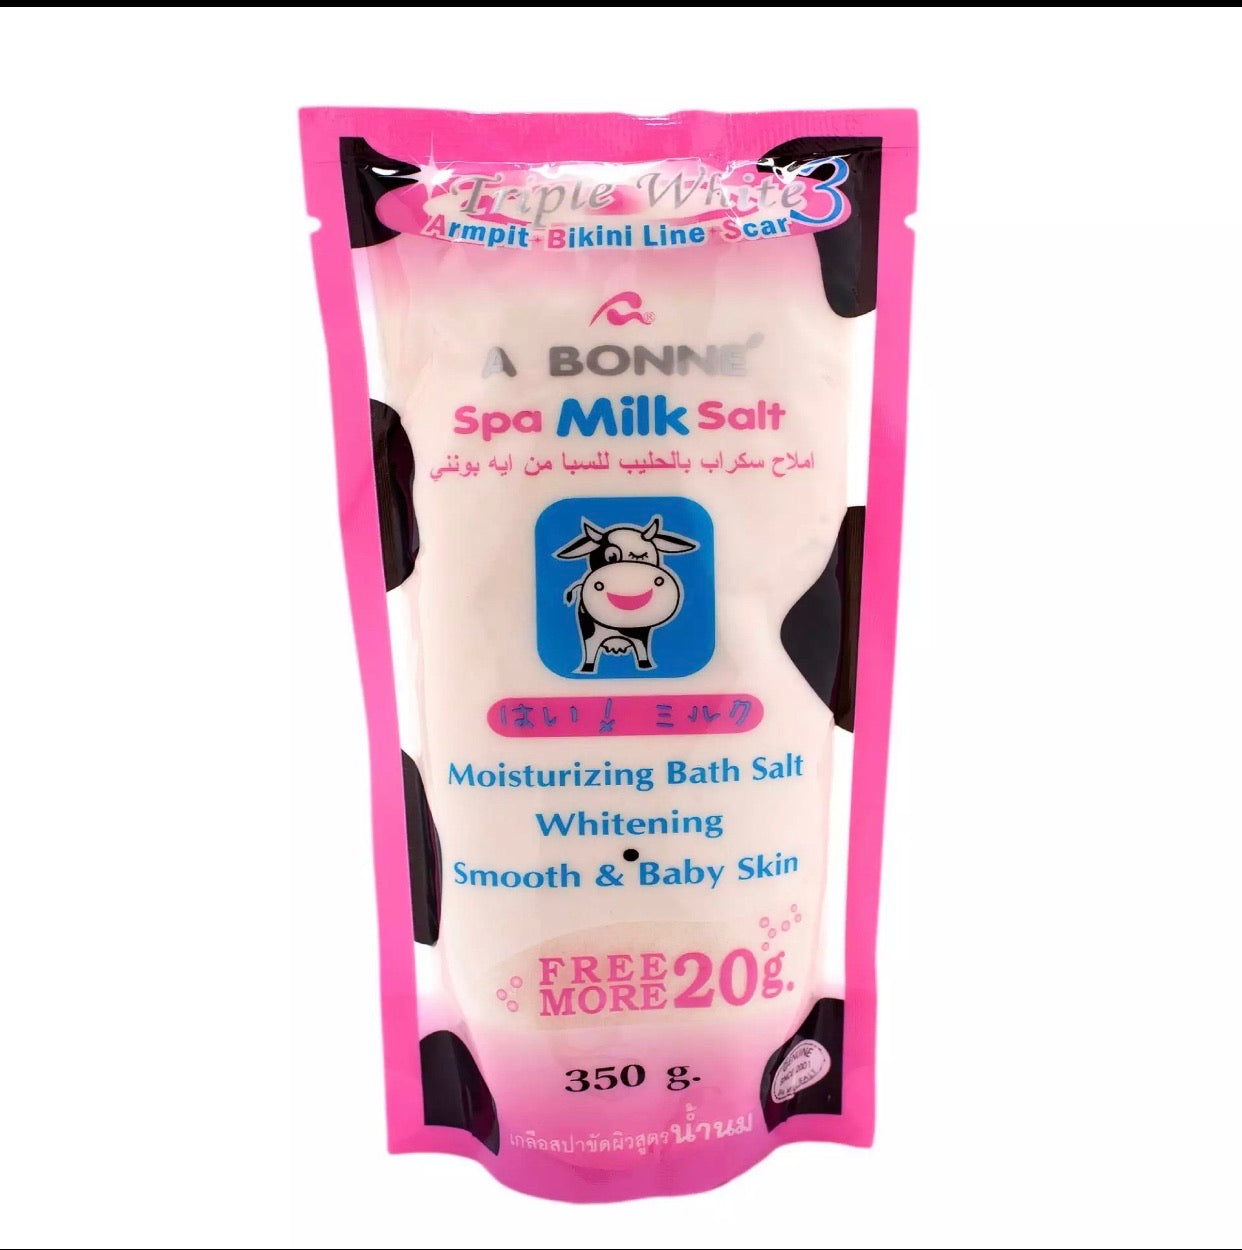 A Bonne Spa Milk salt 350g